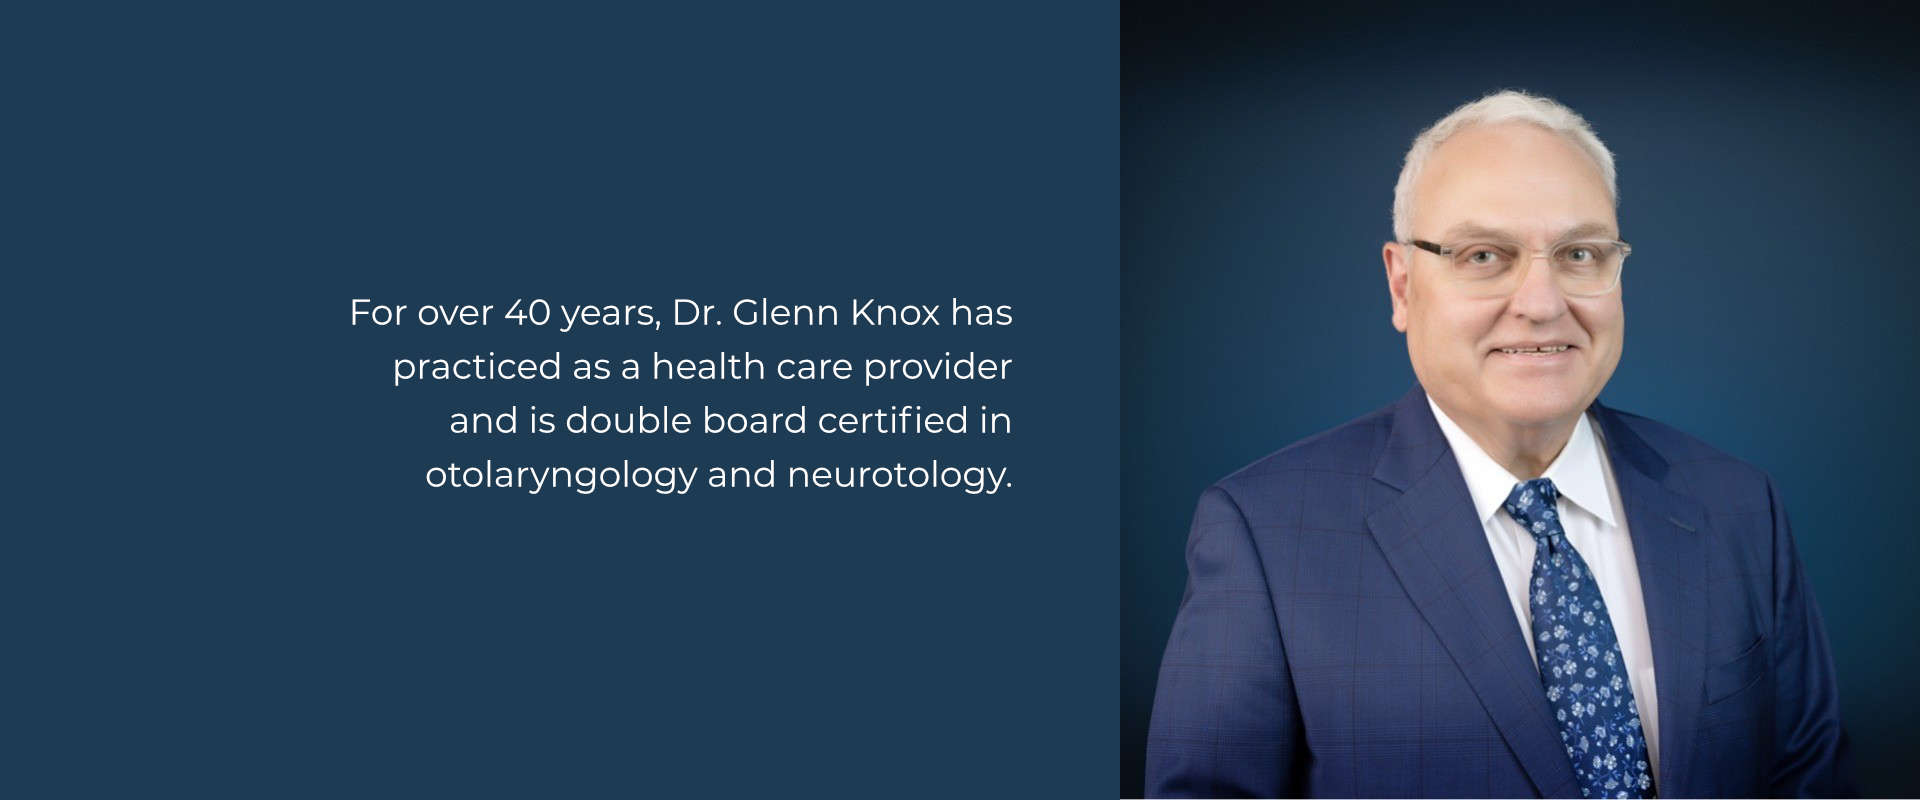 Dr. Glenn Knox, MD - otolaryngology and neurotology